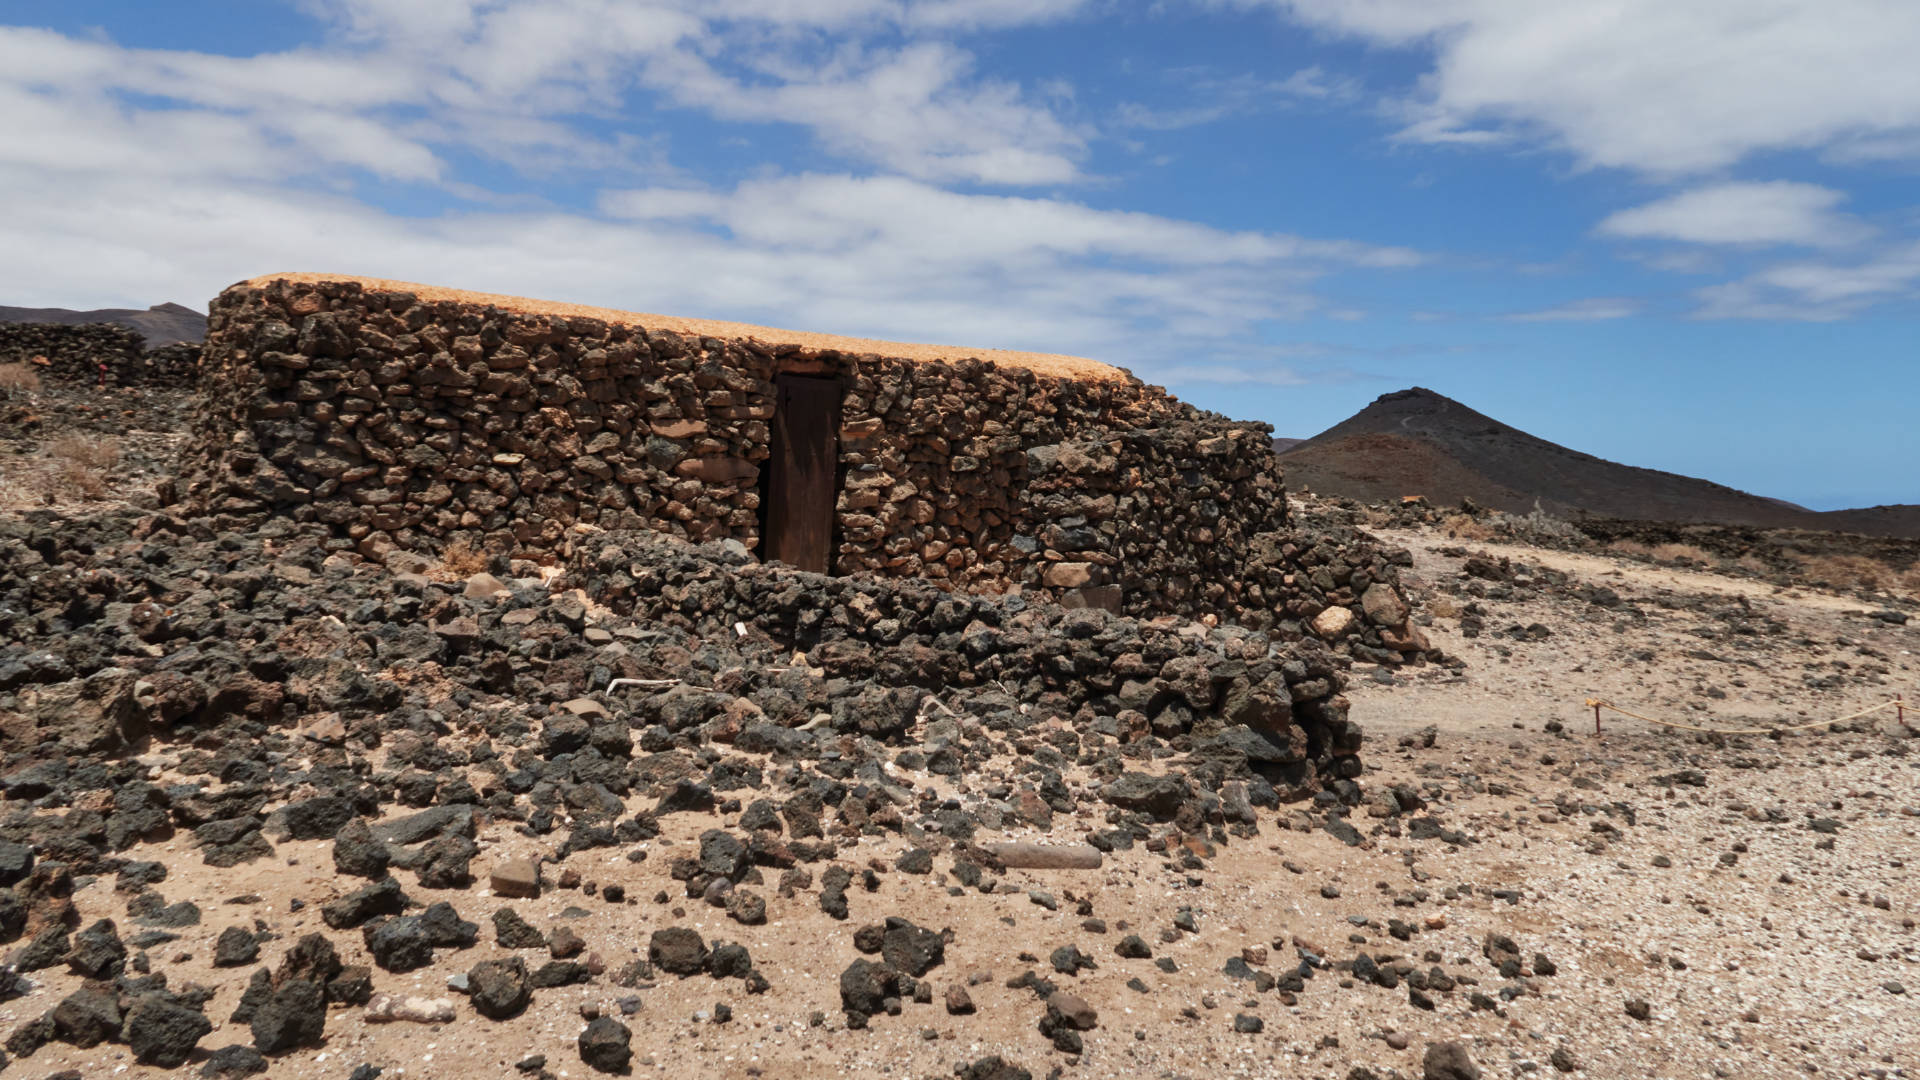 Poblado de la Atalayita Pozo Negro Fuerteventura.